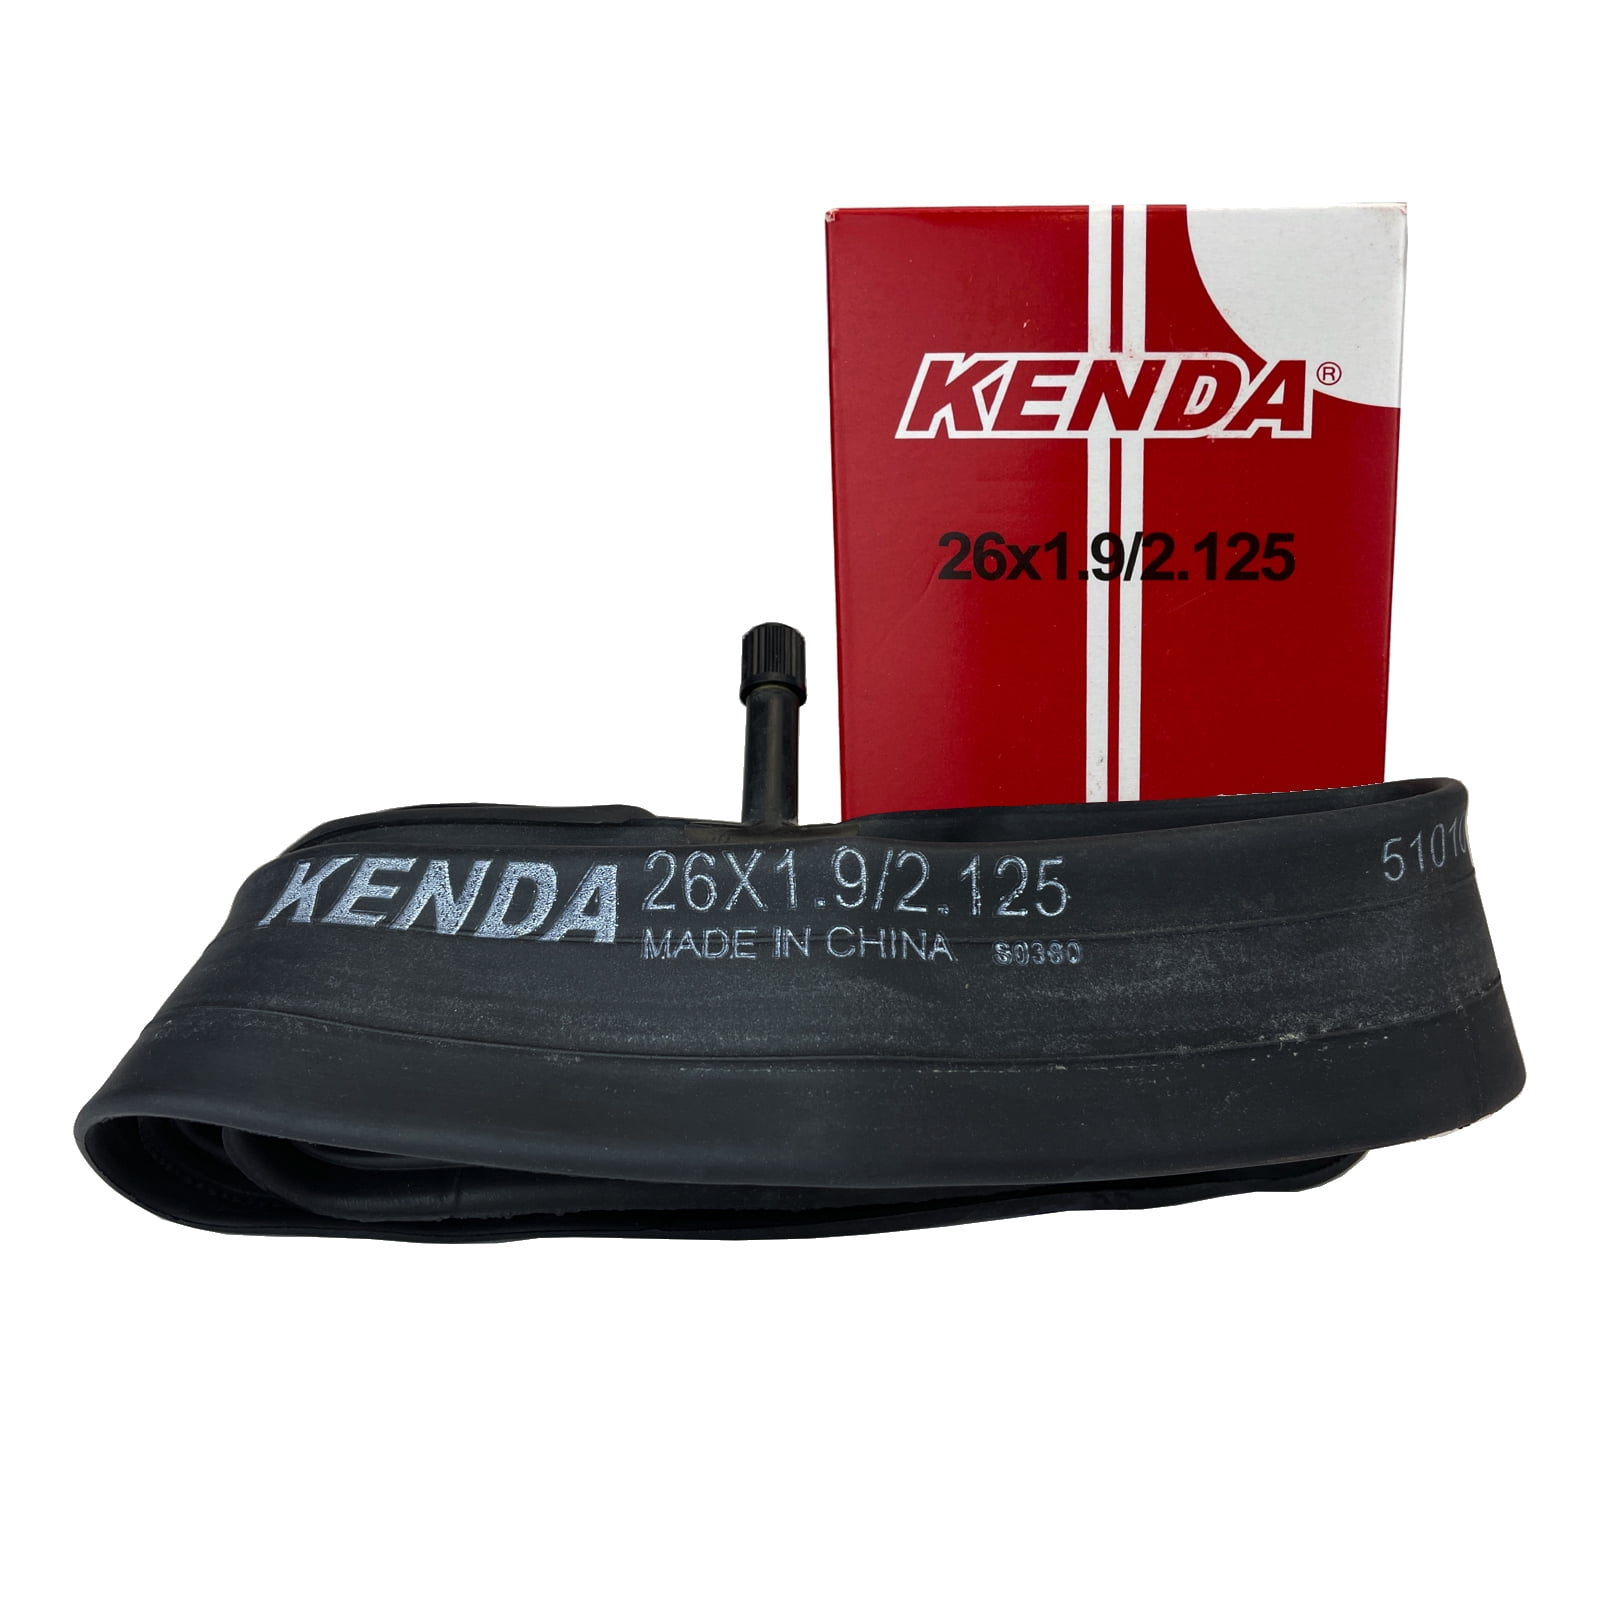 KENDA Bike Bicycle Tyre Butyl Inner Tube Presta/Schrader Valve # Multi Sizes 